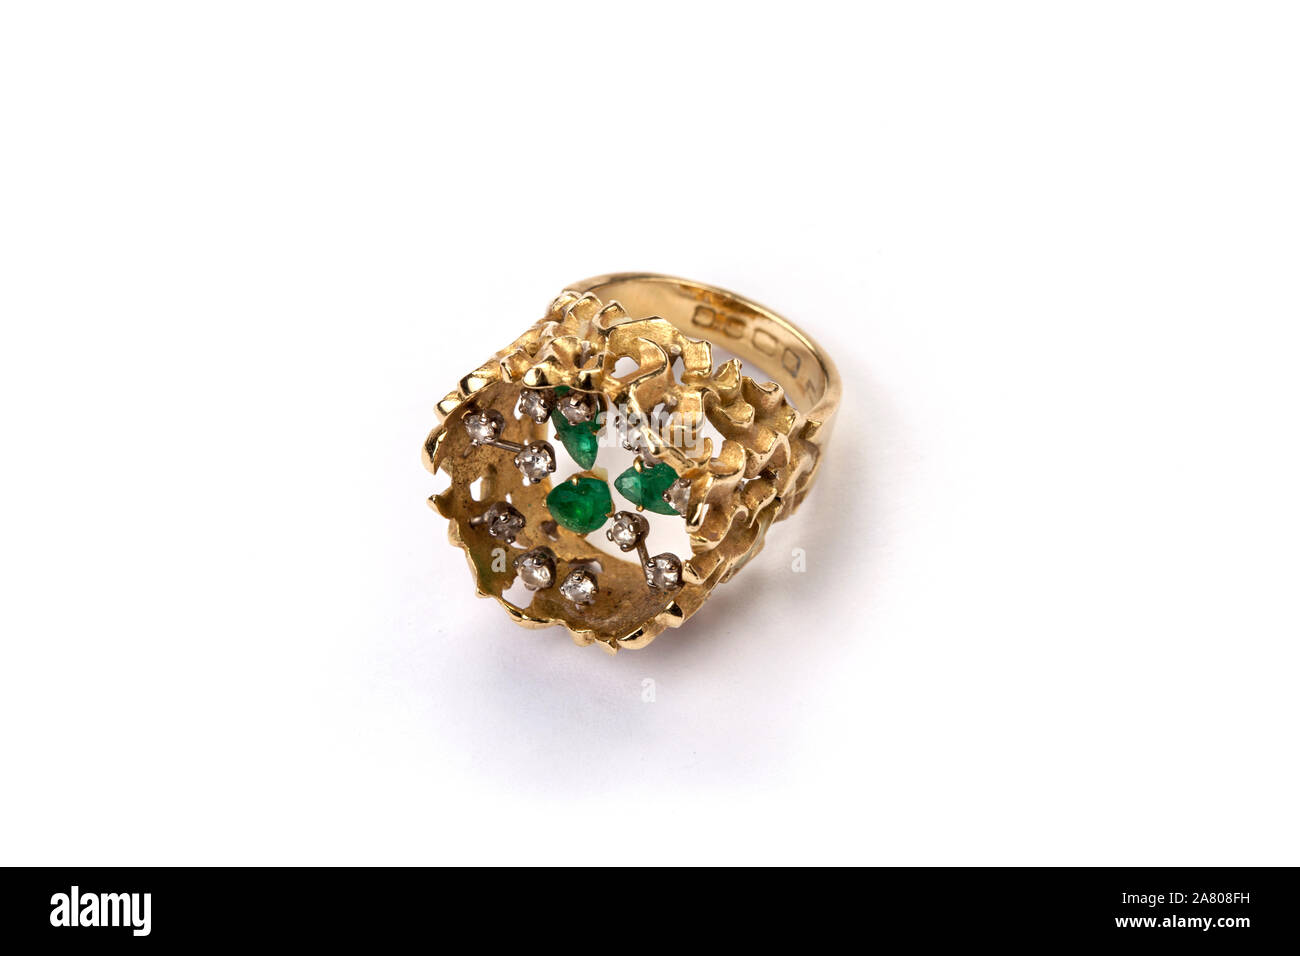 Gold,emeralds and diamonds ring by John Donald. Stock Photo